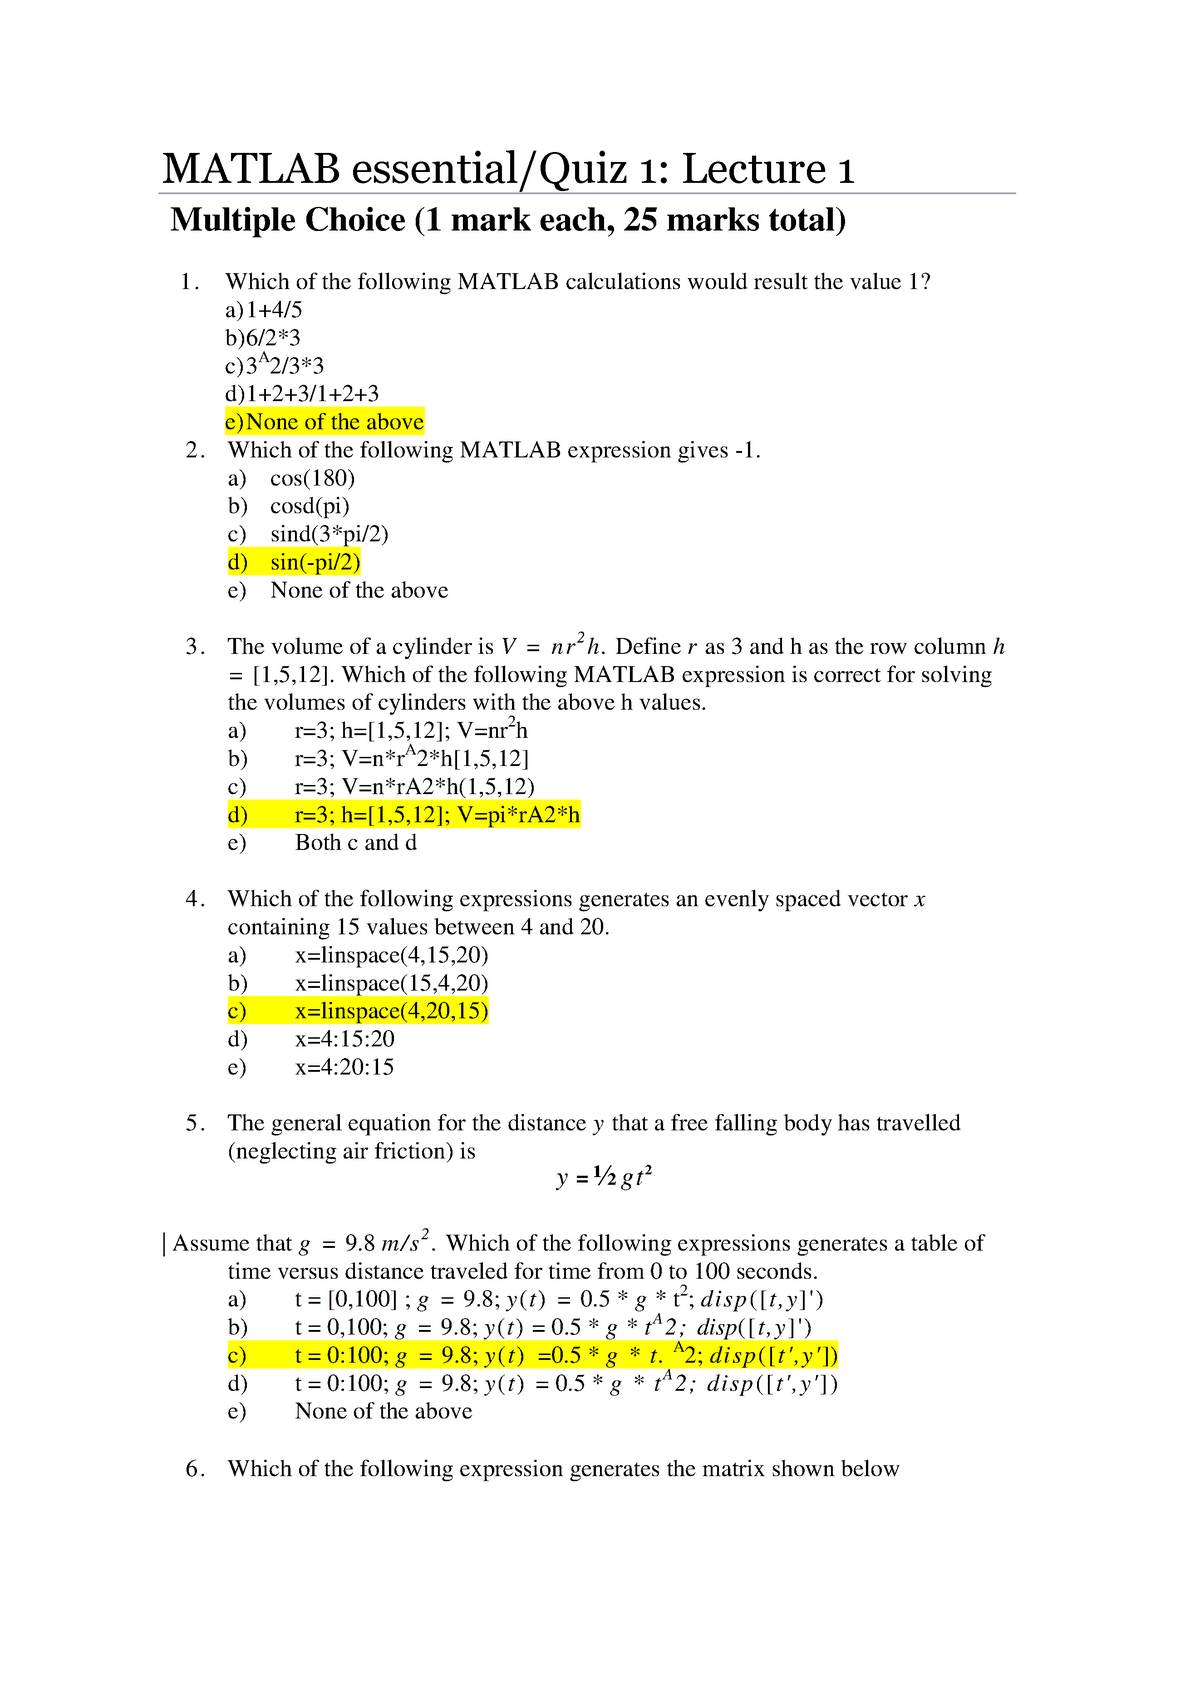 Matlab Essential/Quiz 1 &3 - A) Cos(180) B) Cosd(Pi) C) Sind(3*Pi/2) D)  Sin(-Pi/2) E) None Of The - Studocu